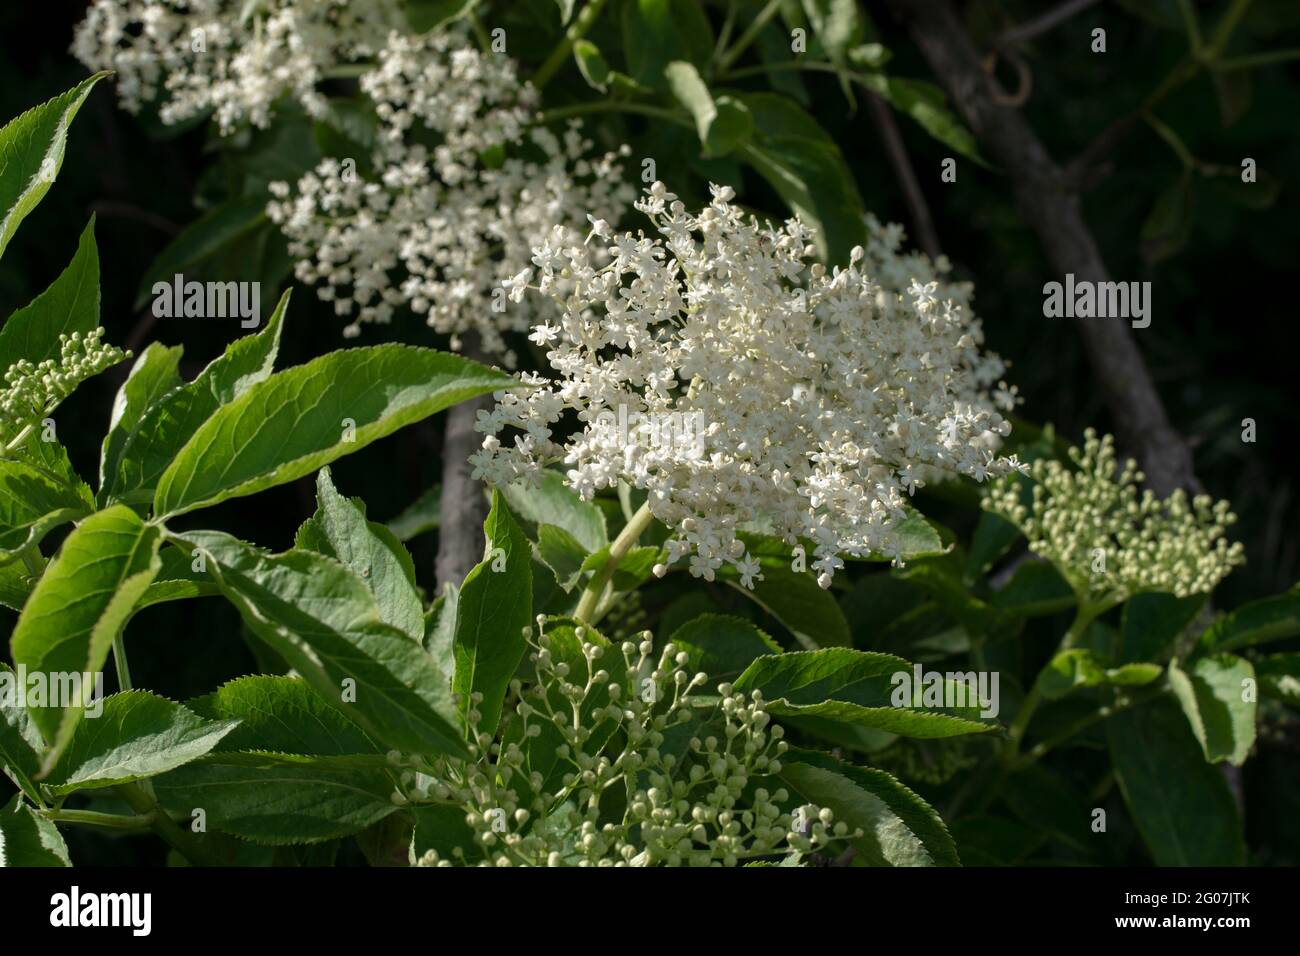 Elderberry (Sambucus nigra) flower and foliage. Plant is also known as elder, European elderberry or European black elderberry. Stock Photo